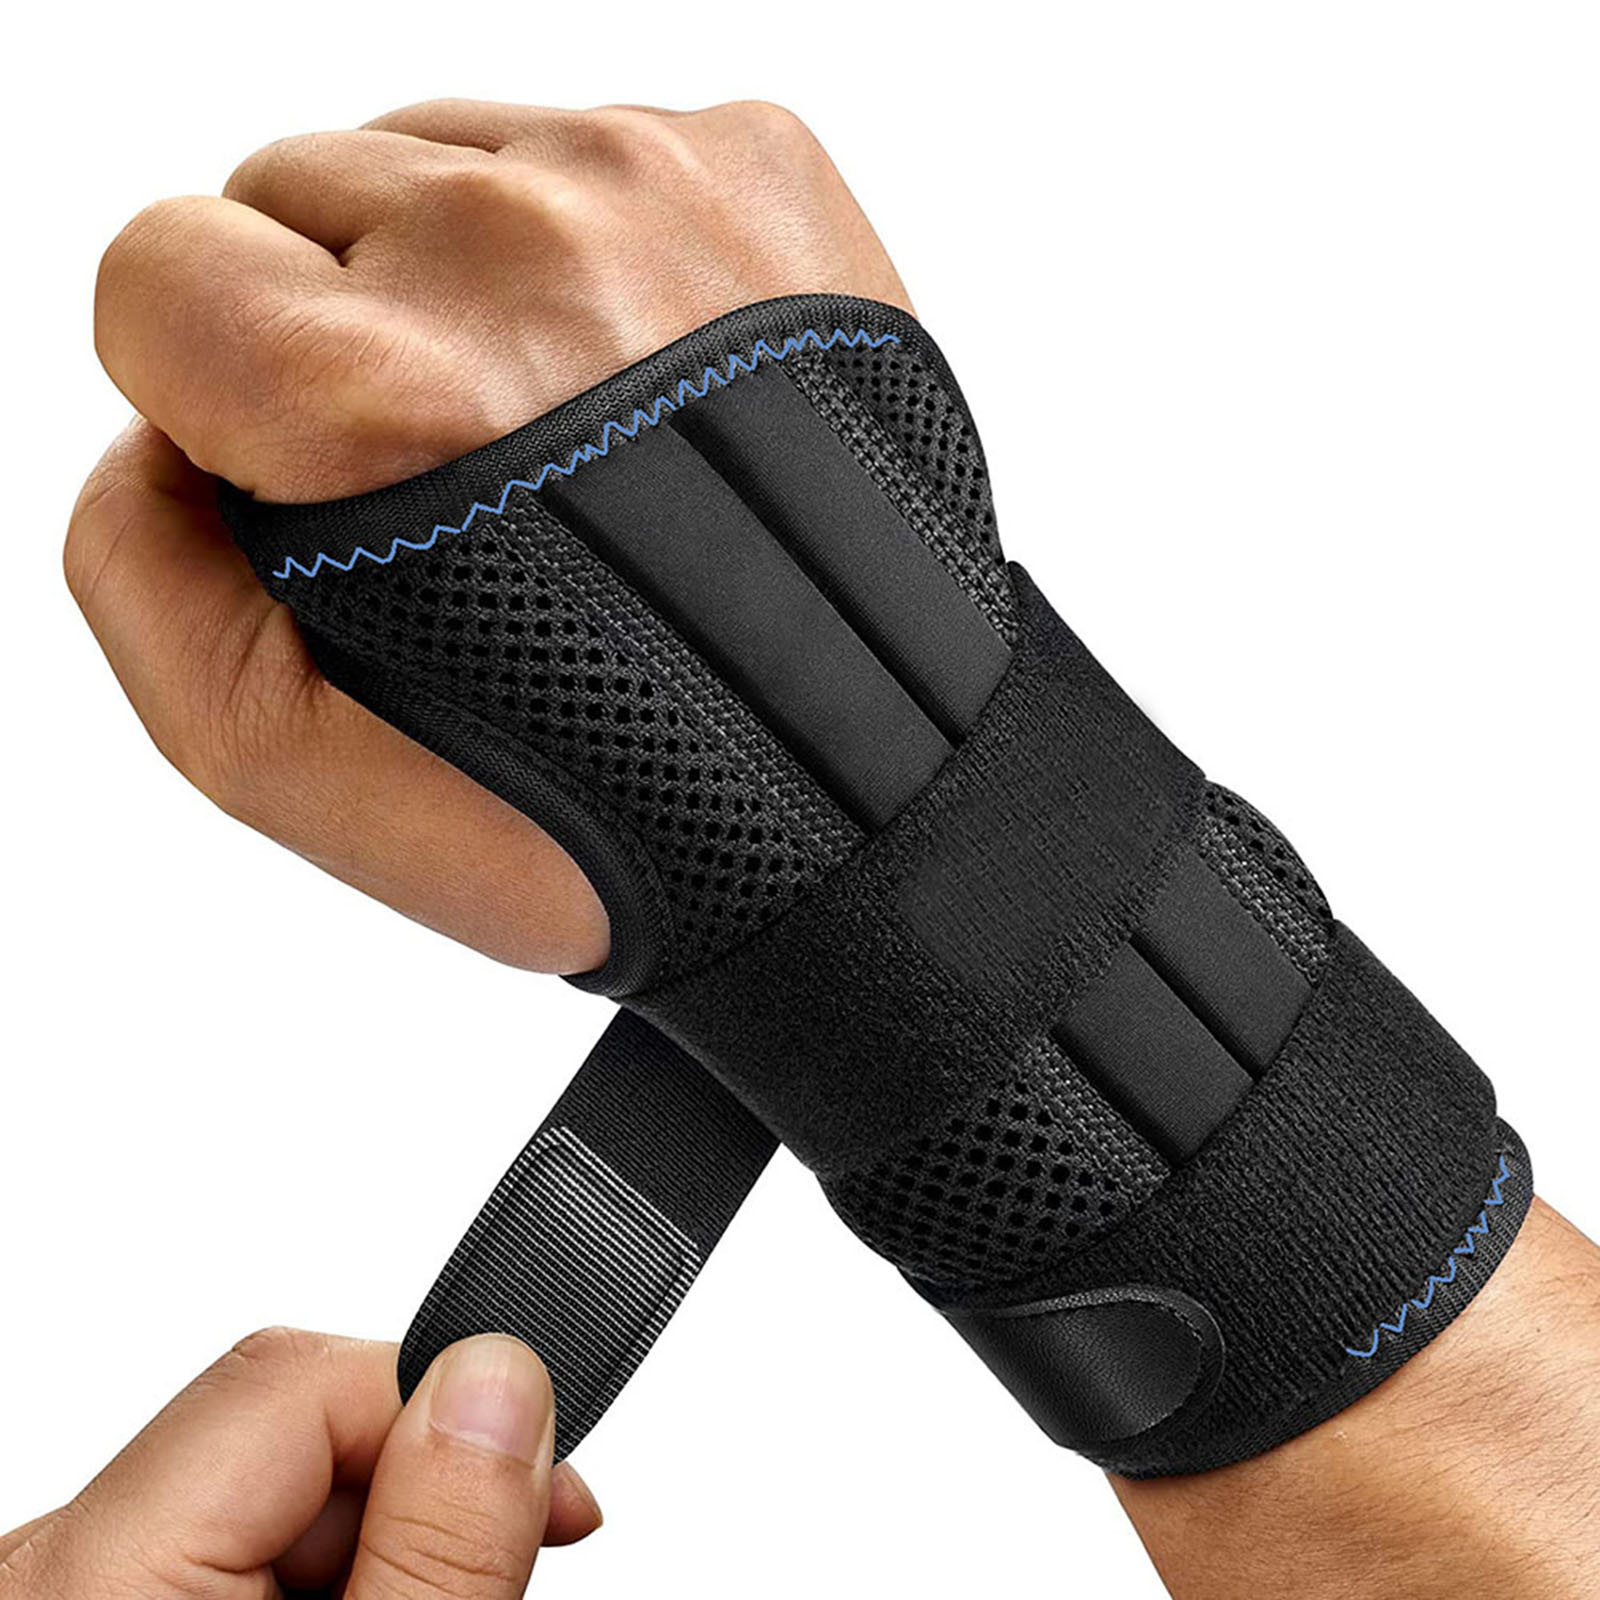 Wrist Bandage Adjustable Day Night Wrist Support With Metal Splint For Men Women Arthritis Sprains Sports Protection